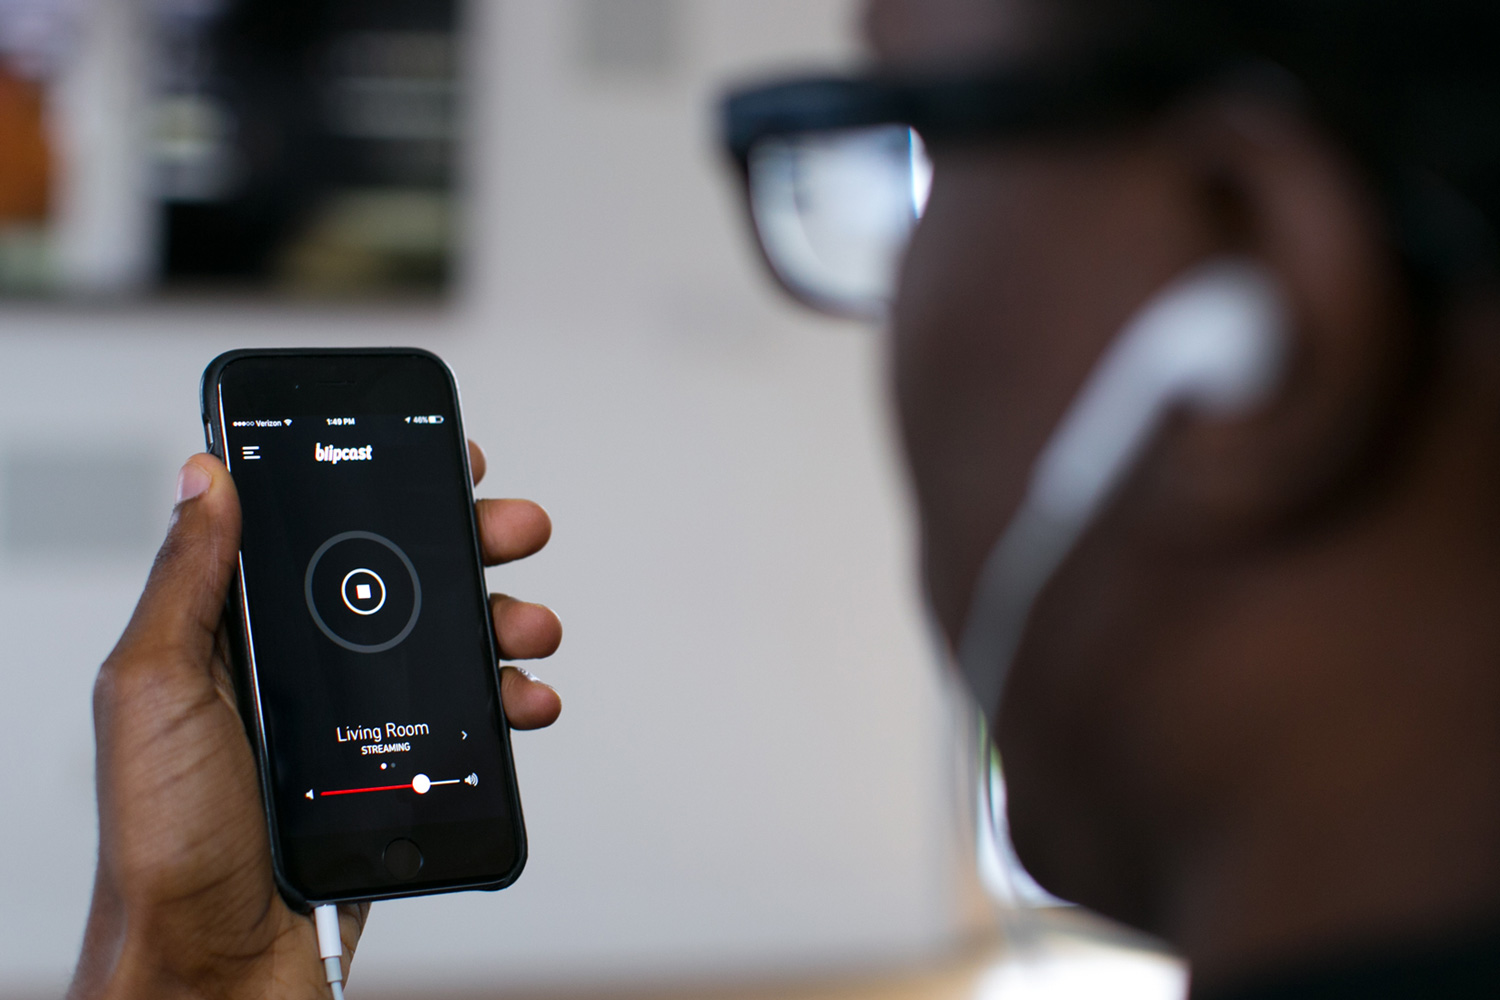 blipcast kickstarter use wired headphones wirelessly lifestyle device wireless sound 3